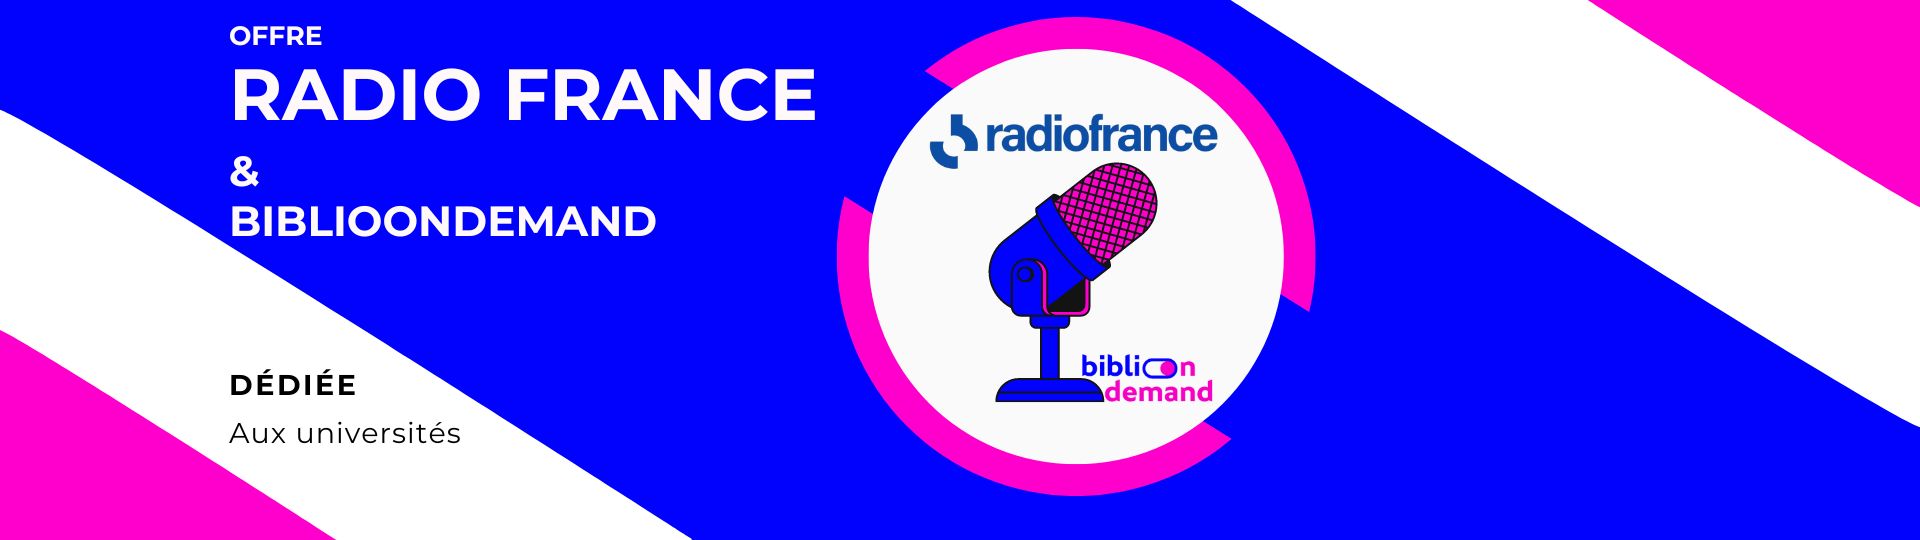 Offre Radio France - Universités | 